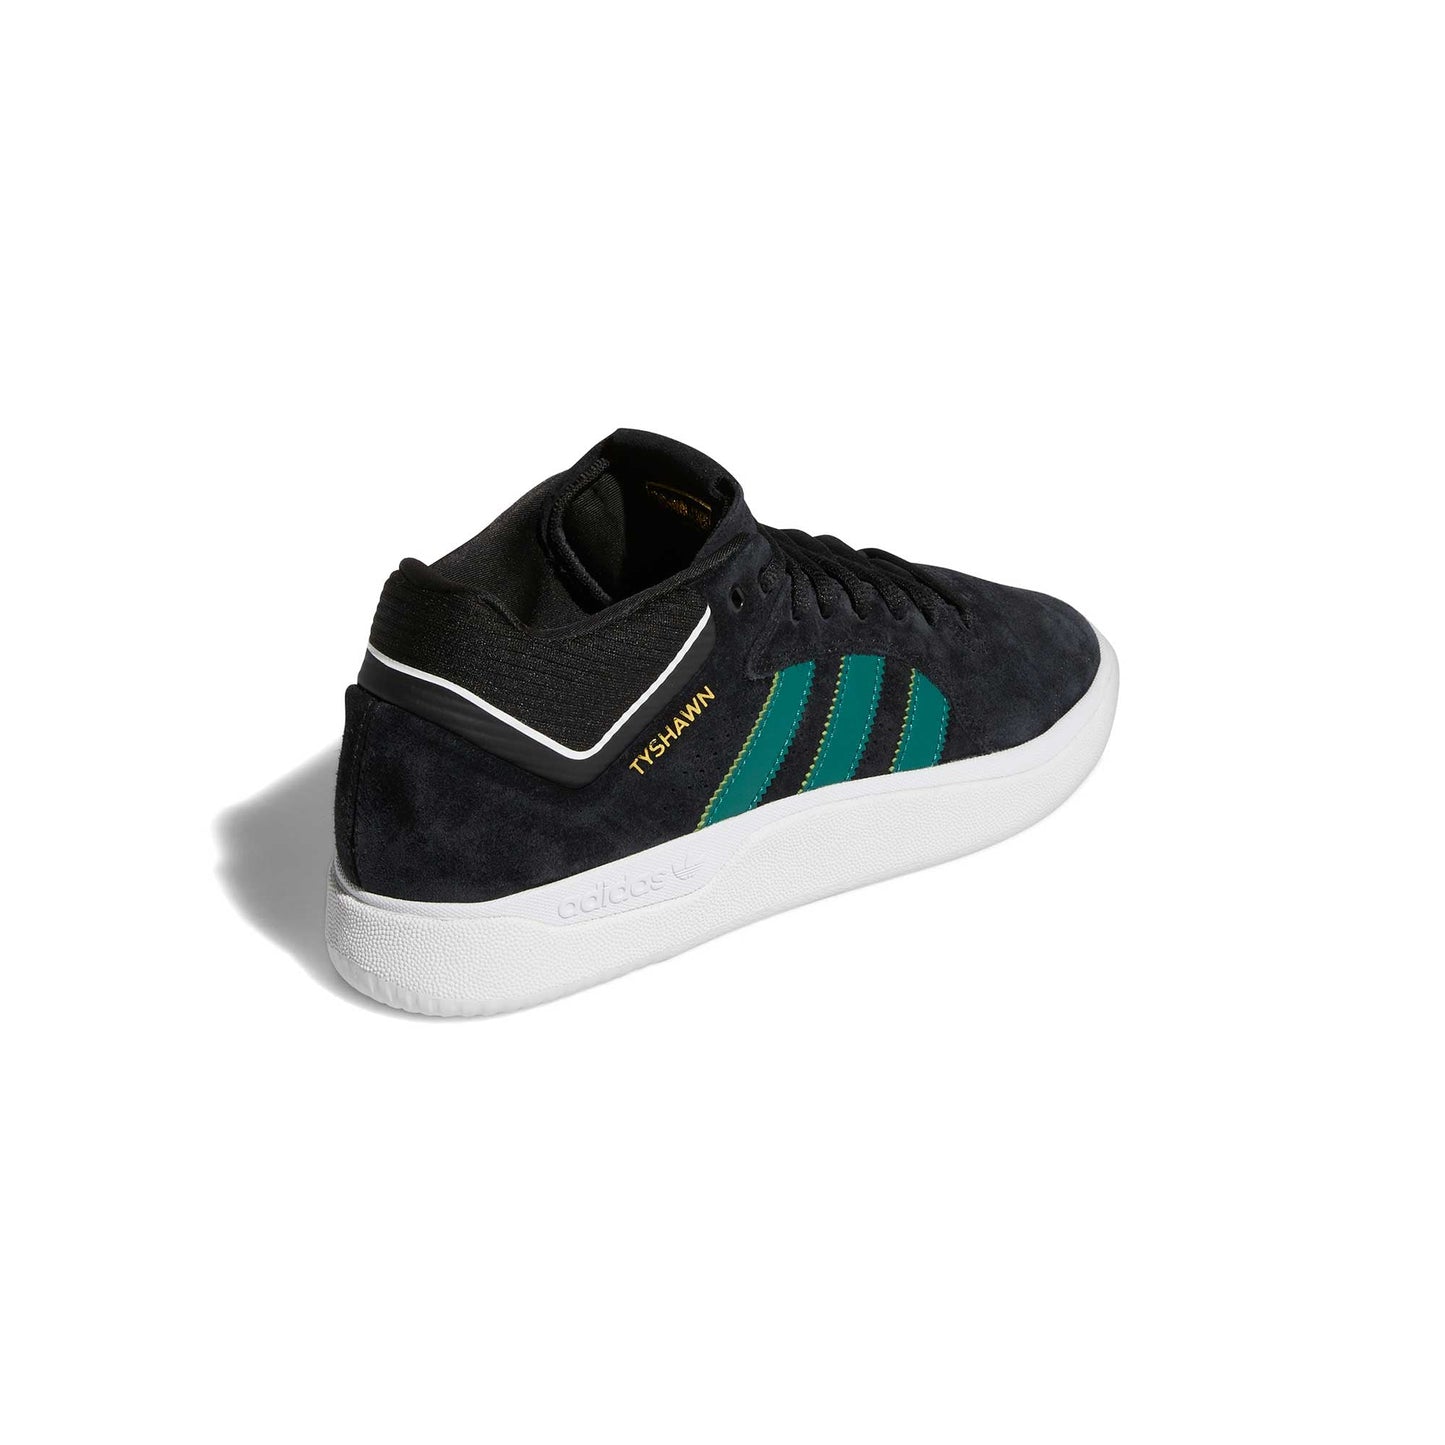 Adidas Tyshawn, core black / collegiate green / cloud white - Tiki Room Skateboards - 6